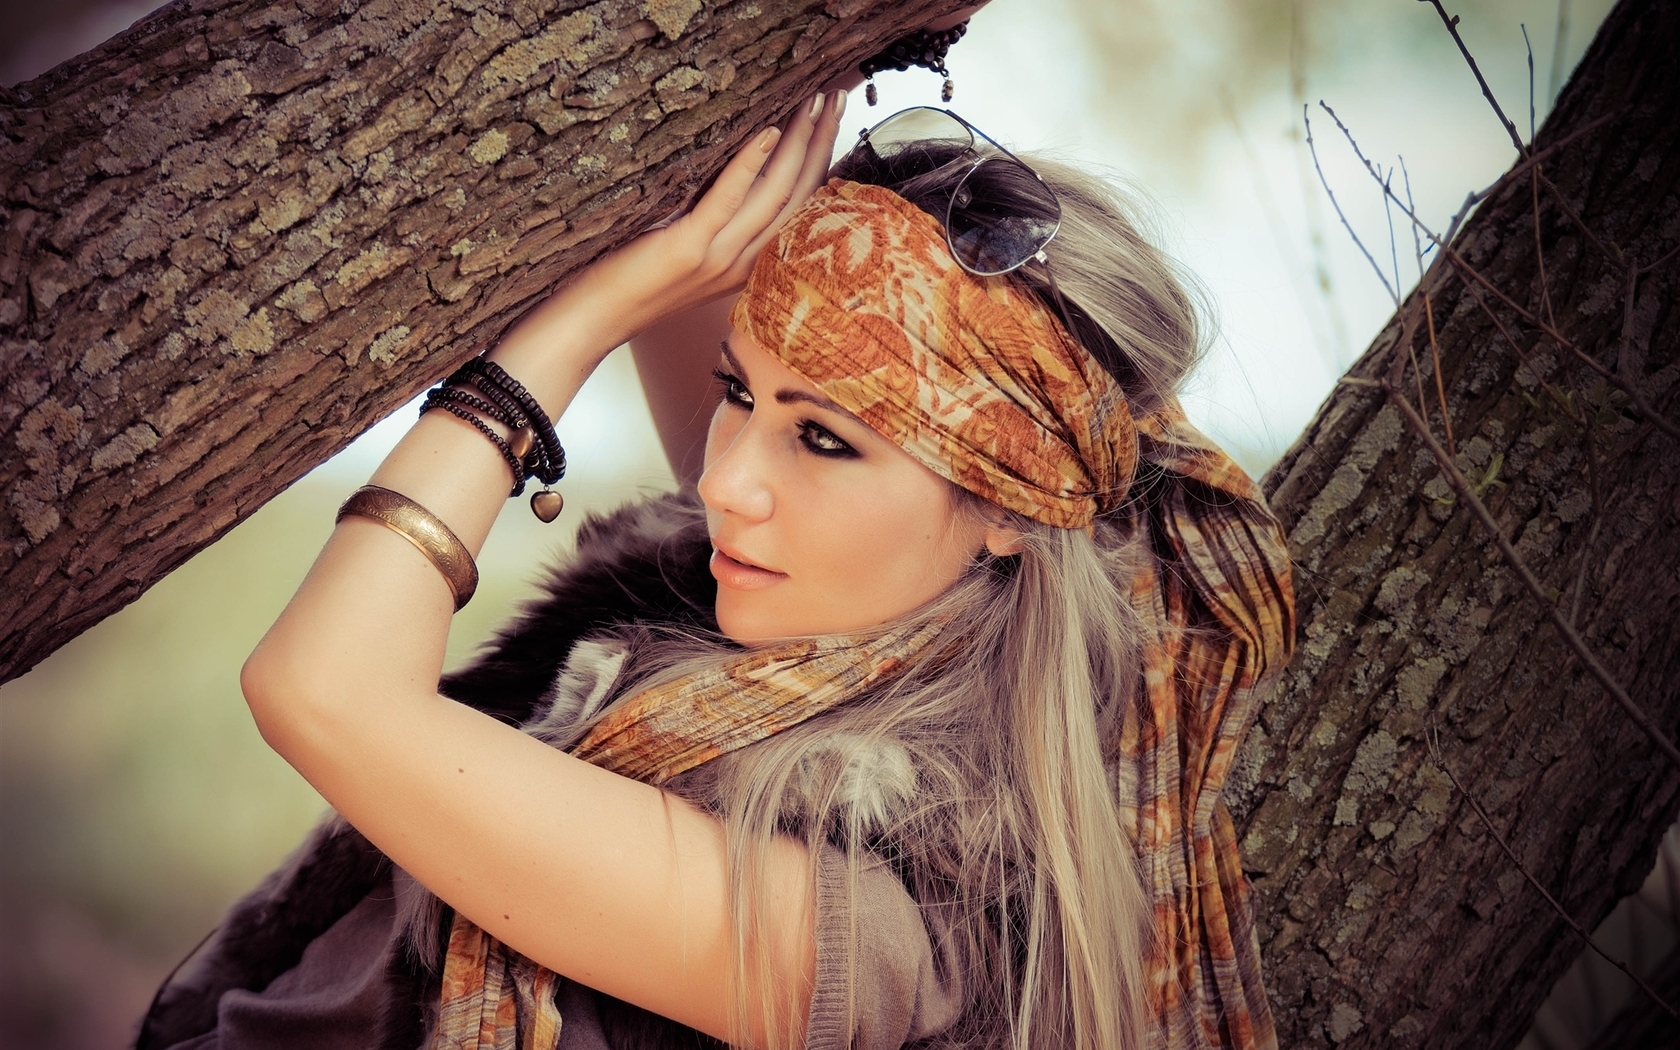 Image: Girl, face, eyes, makeup, long hair, blonde, glasses, bracelets, scarf, trees